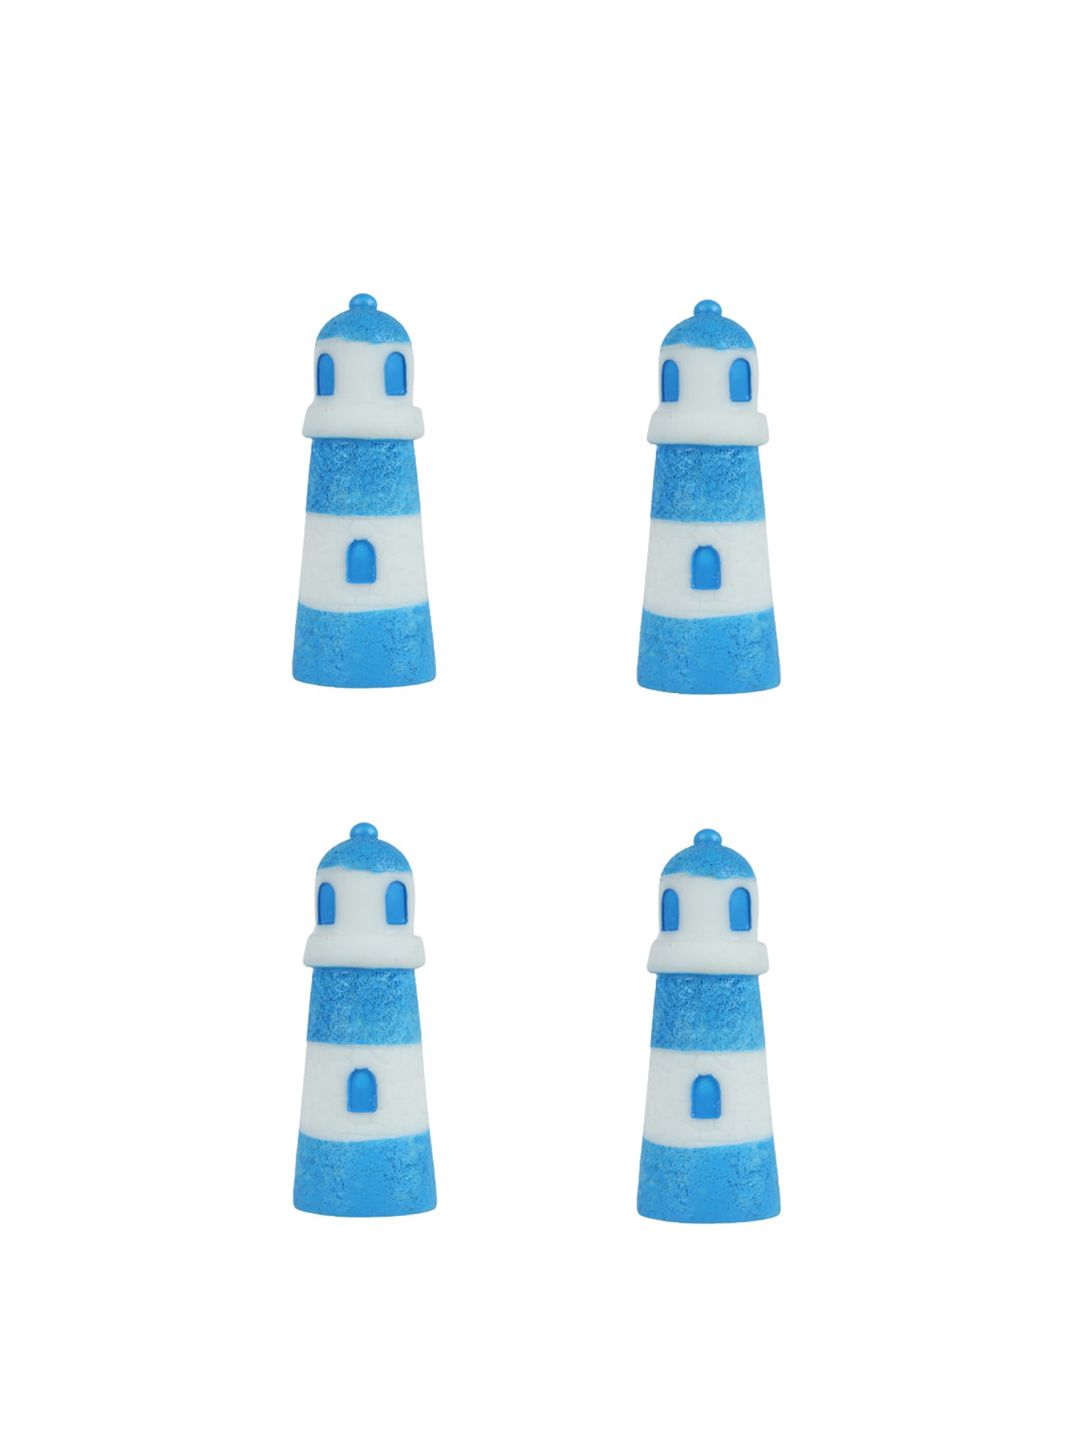 Wonderland Set of 4 Blue & White Light House Garden toys Price in India